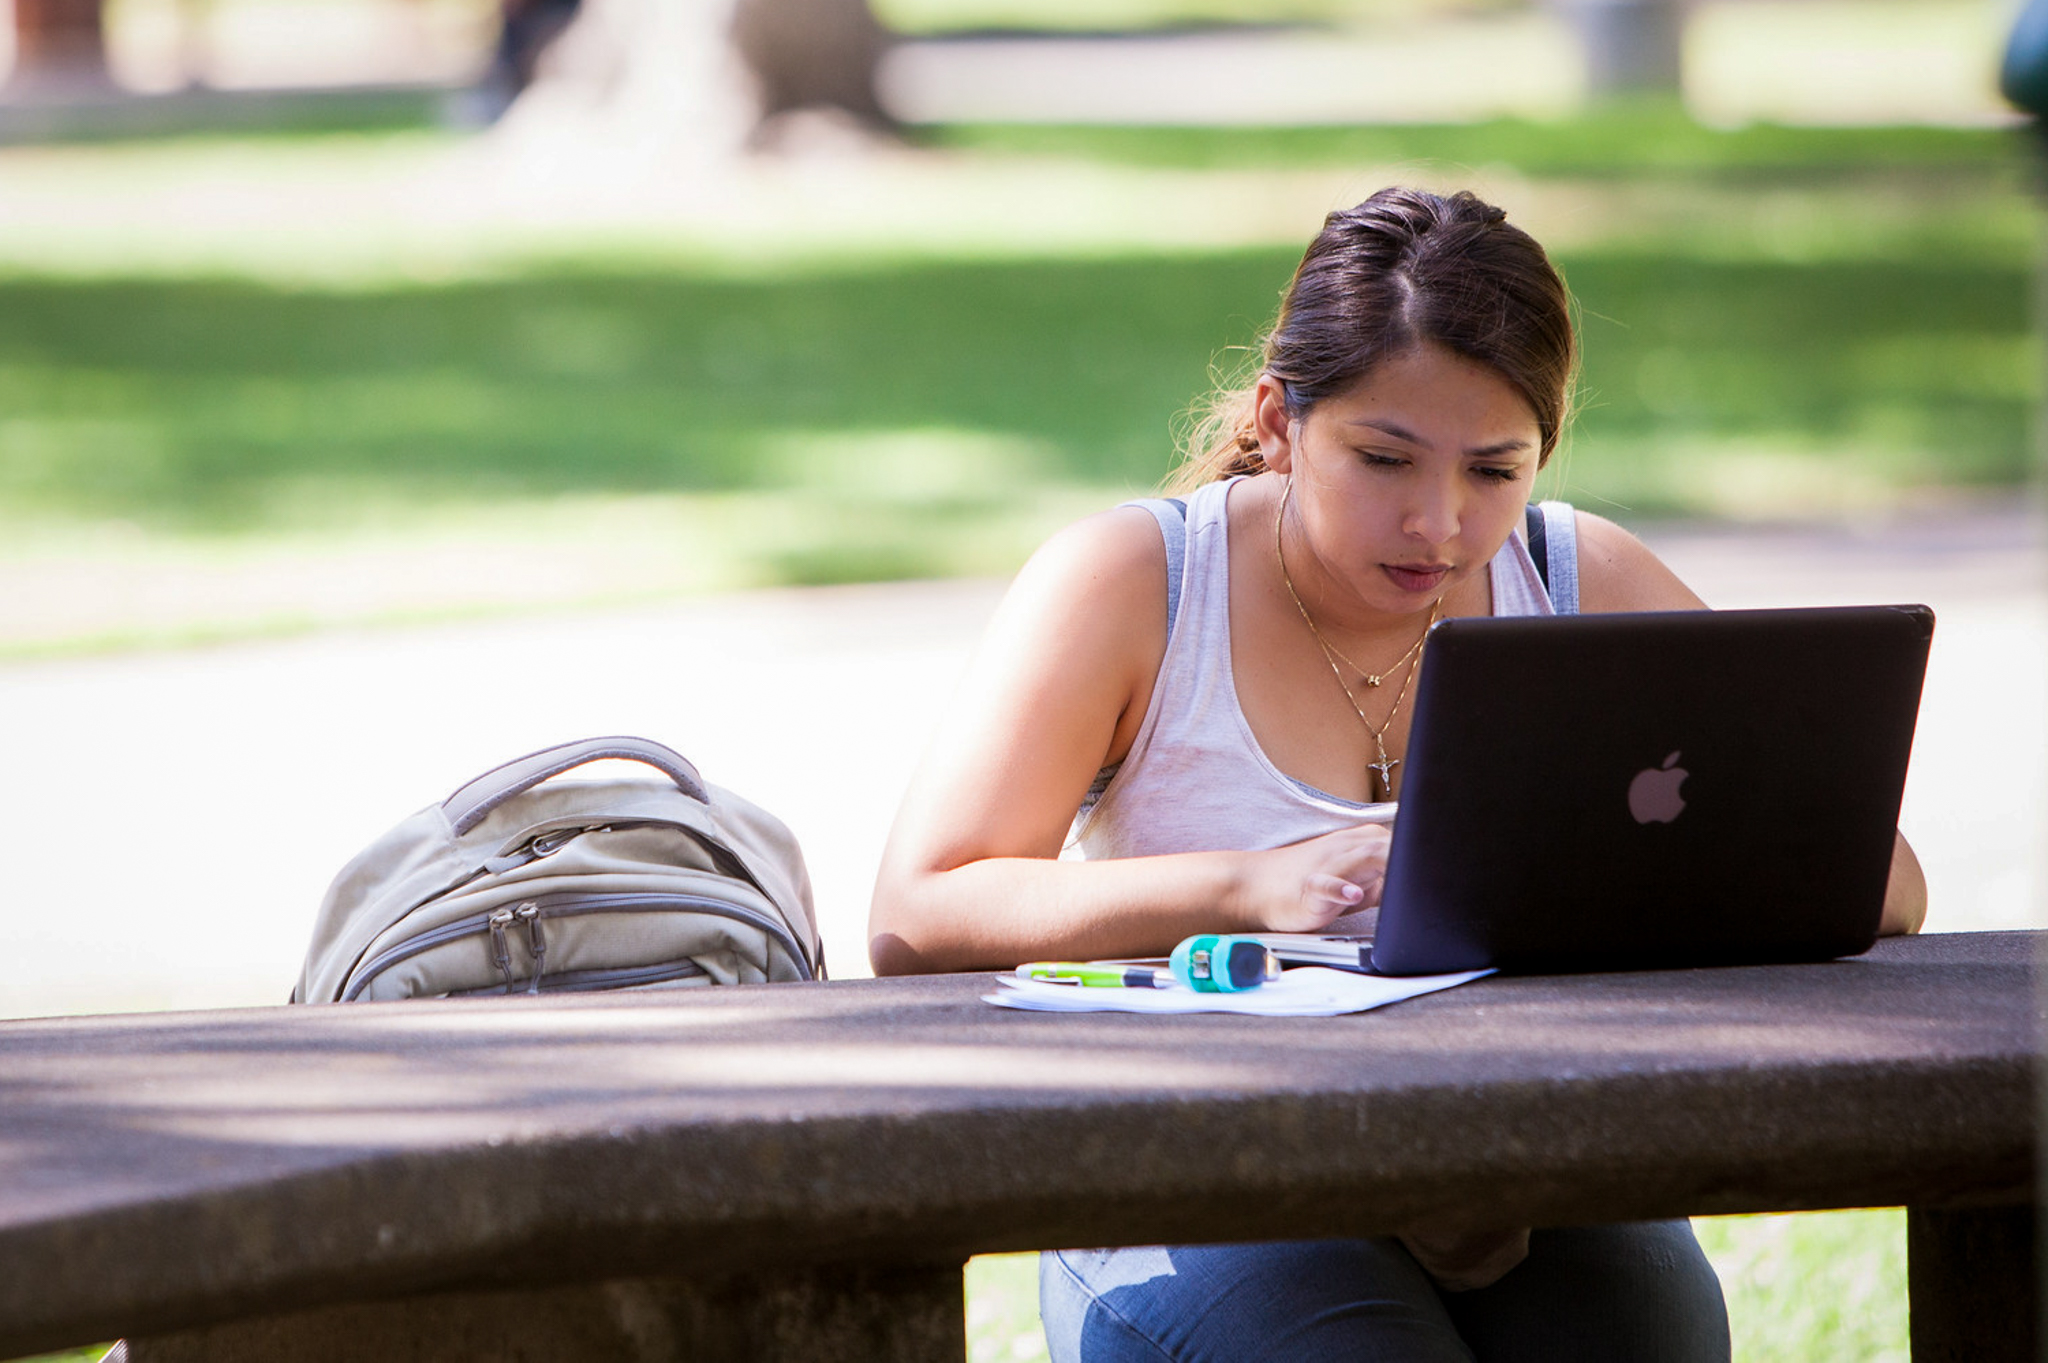 A Sacramento State student works outside on a laptop